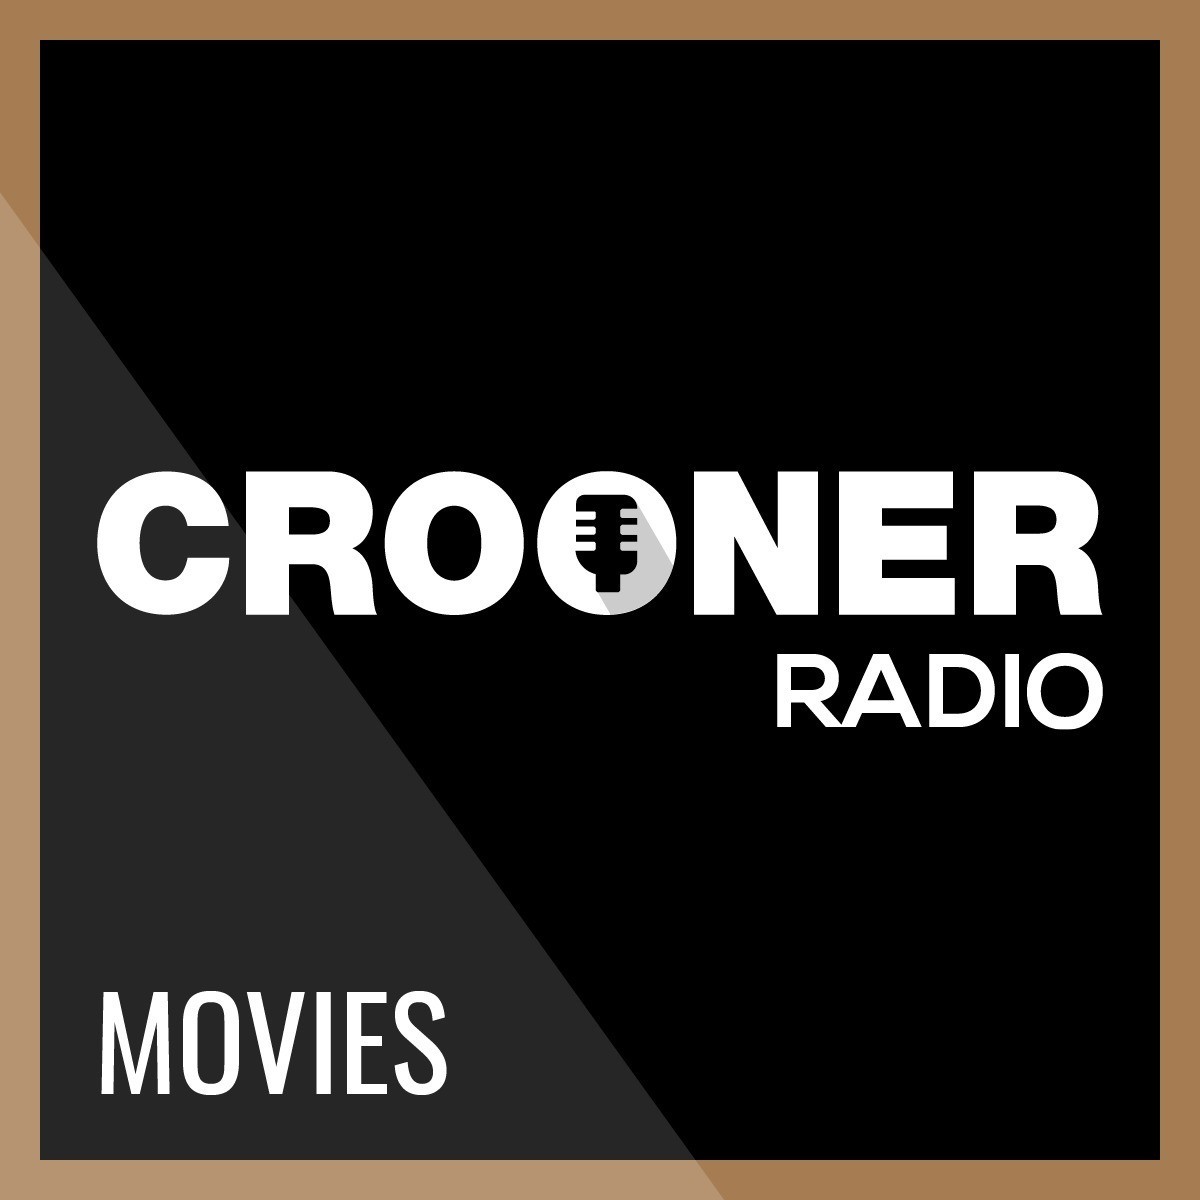 Crooner Radio Movies